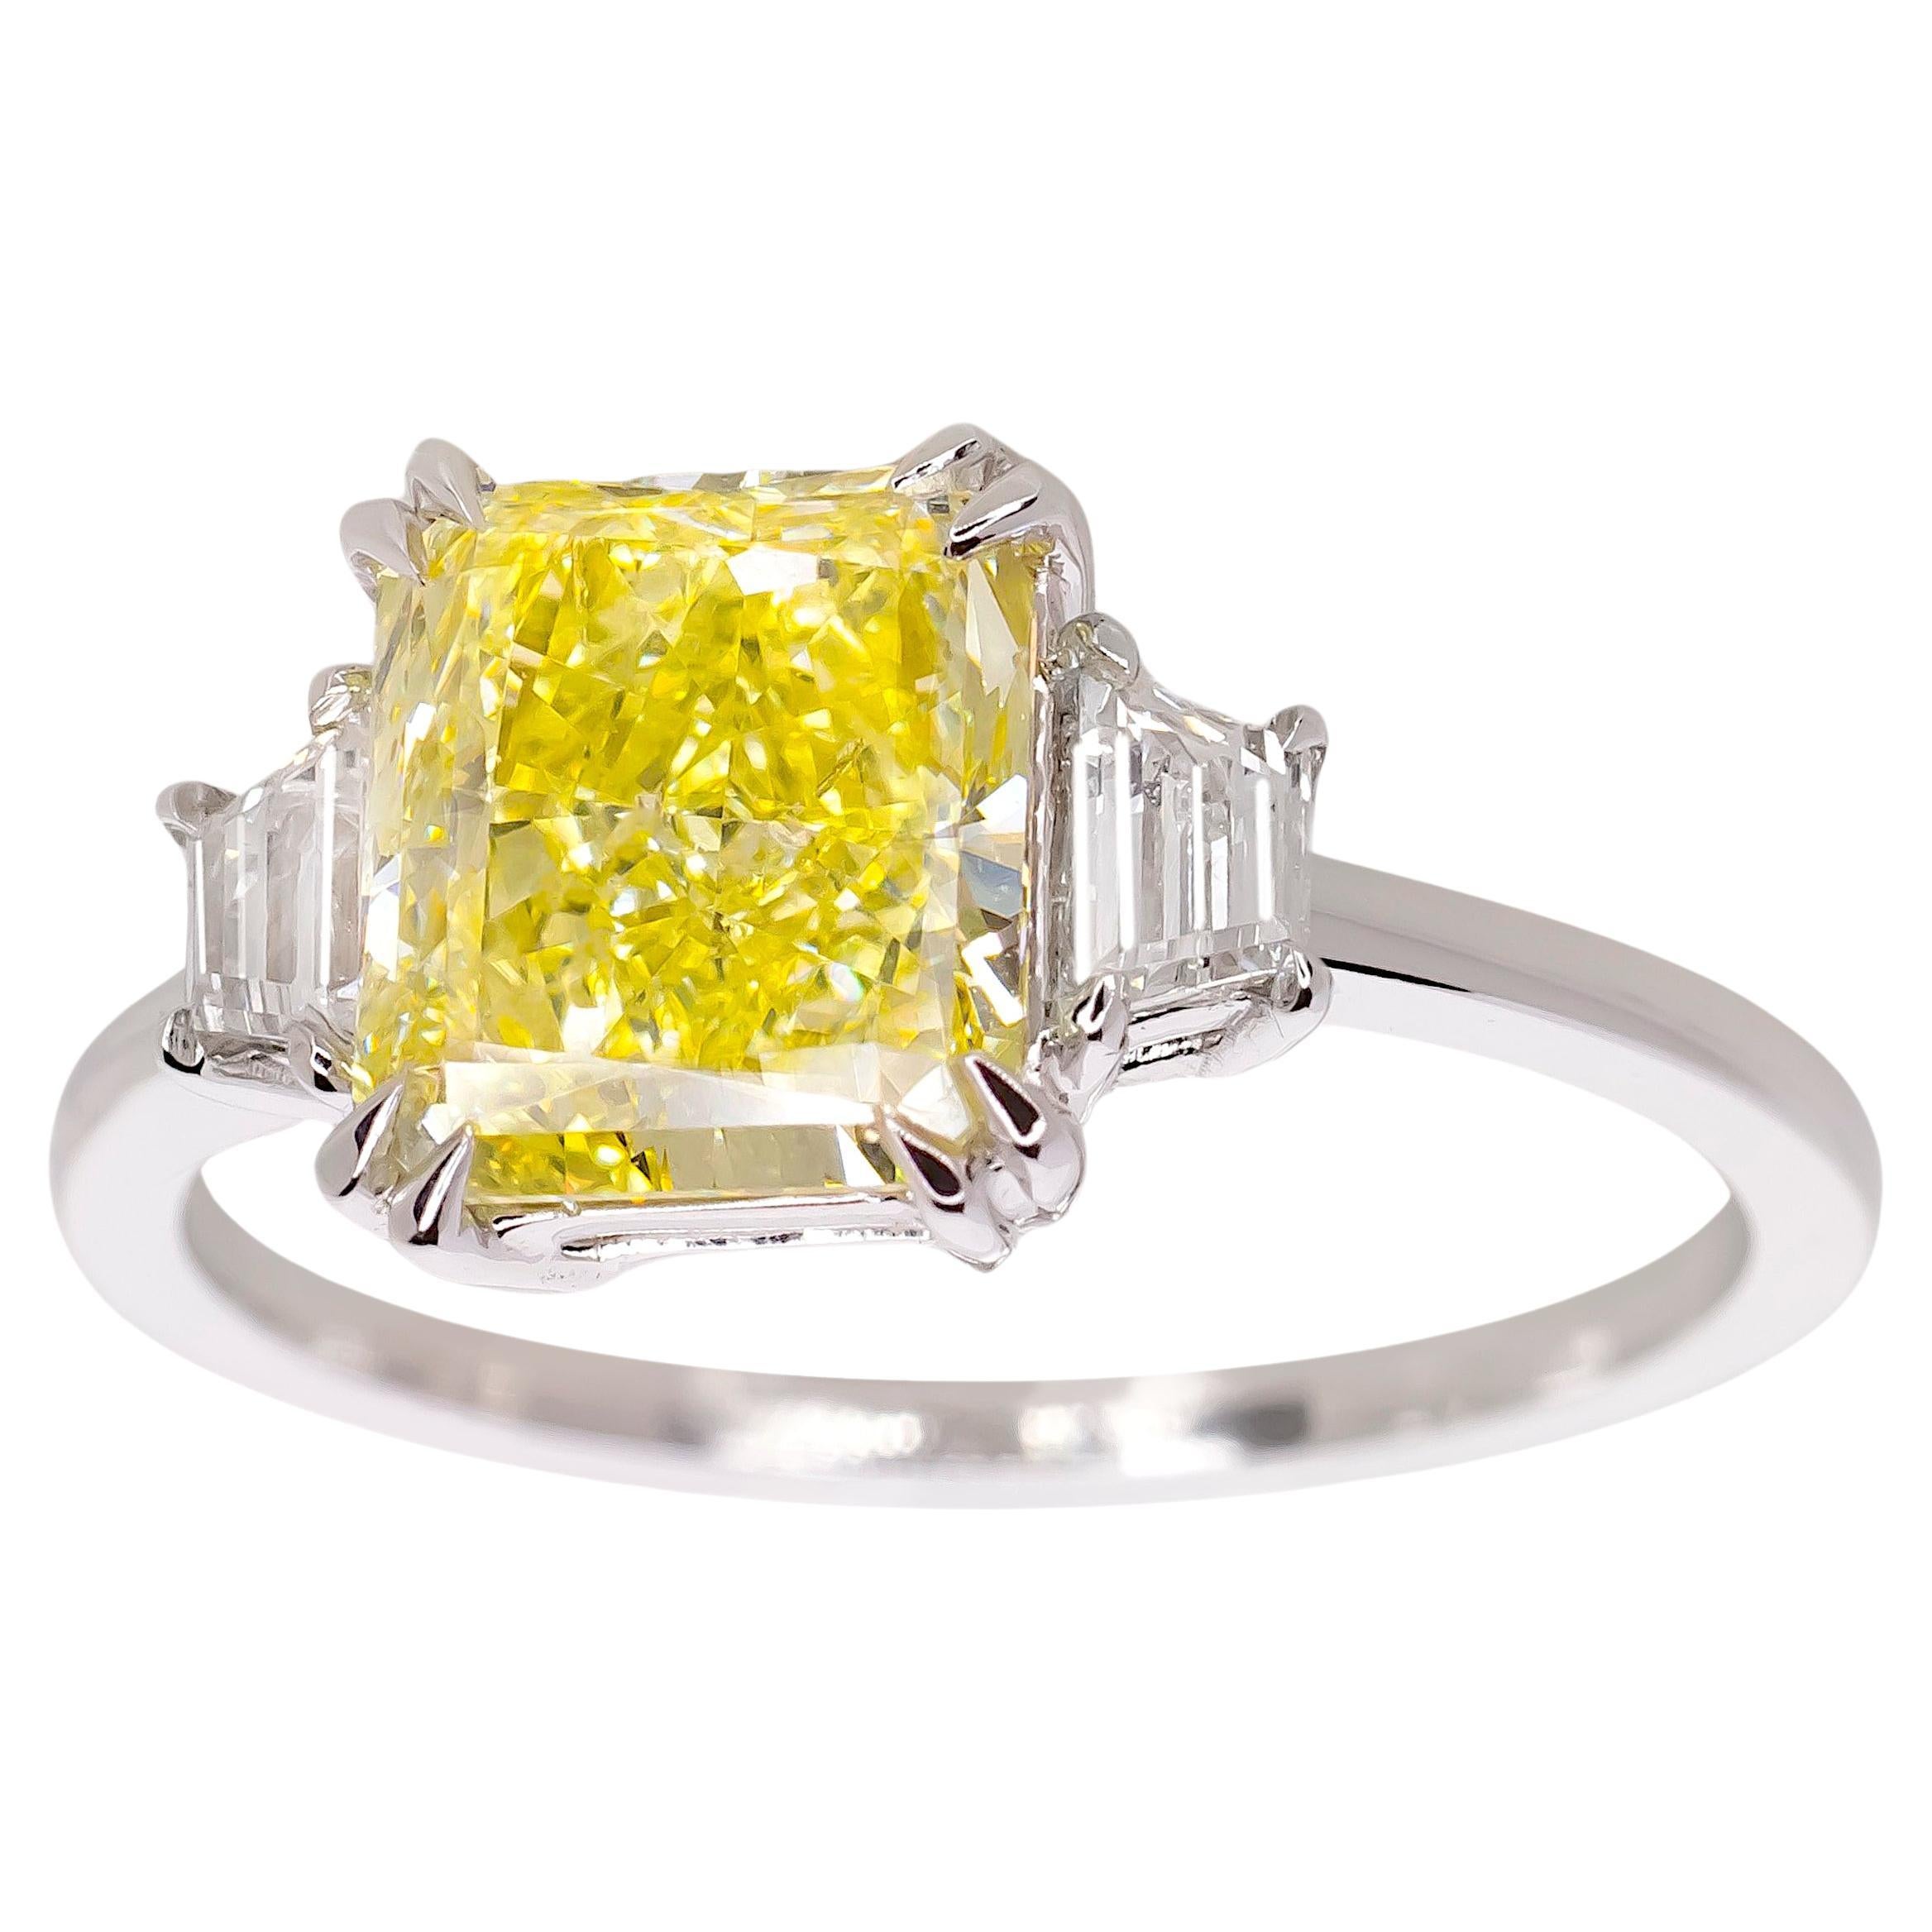 GIA Certified 1.38 Carat Fancy Yellow Radiant Cut Diamond 18K White Gold Ring